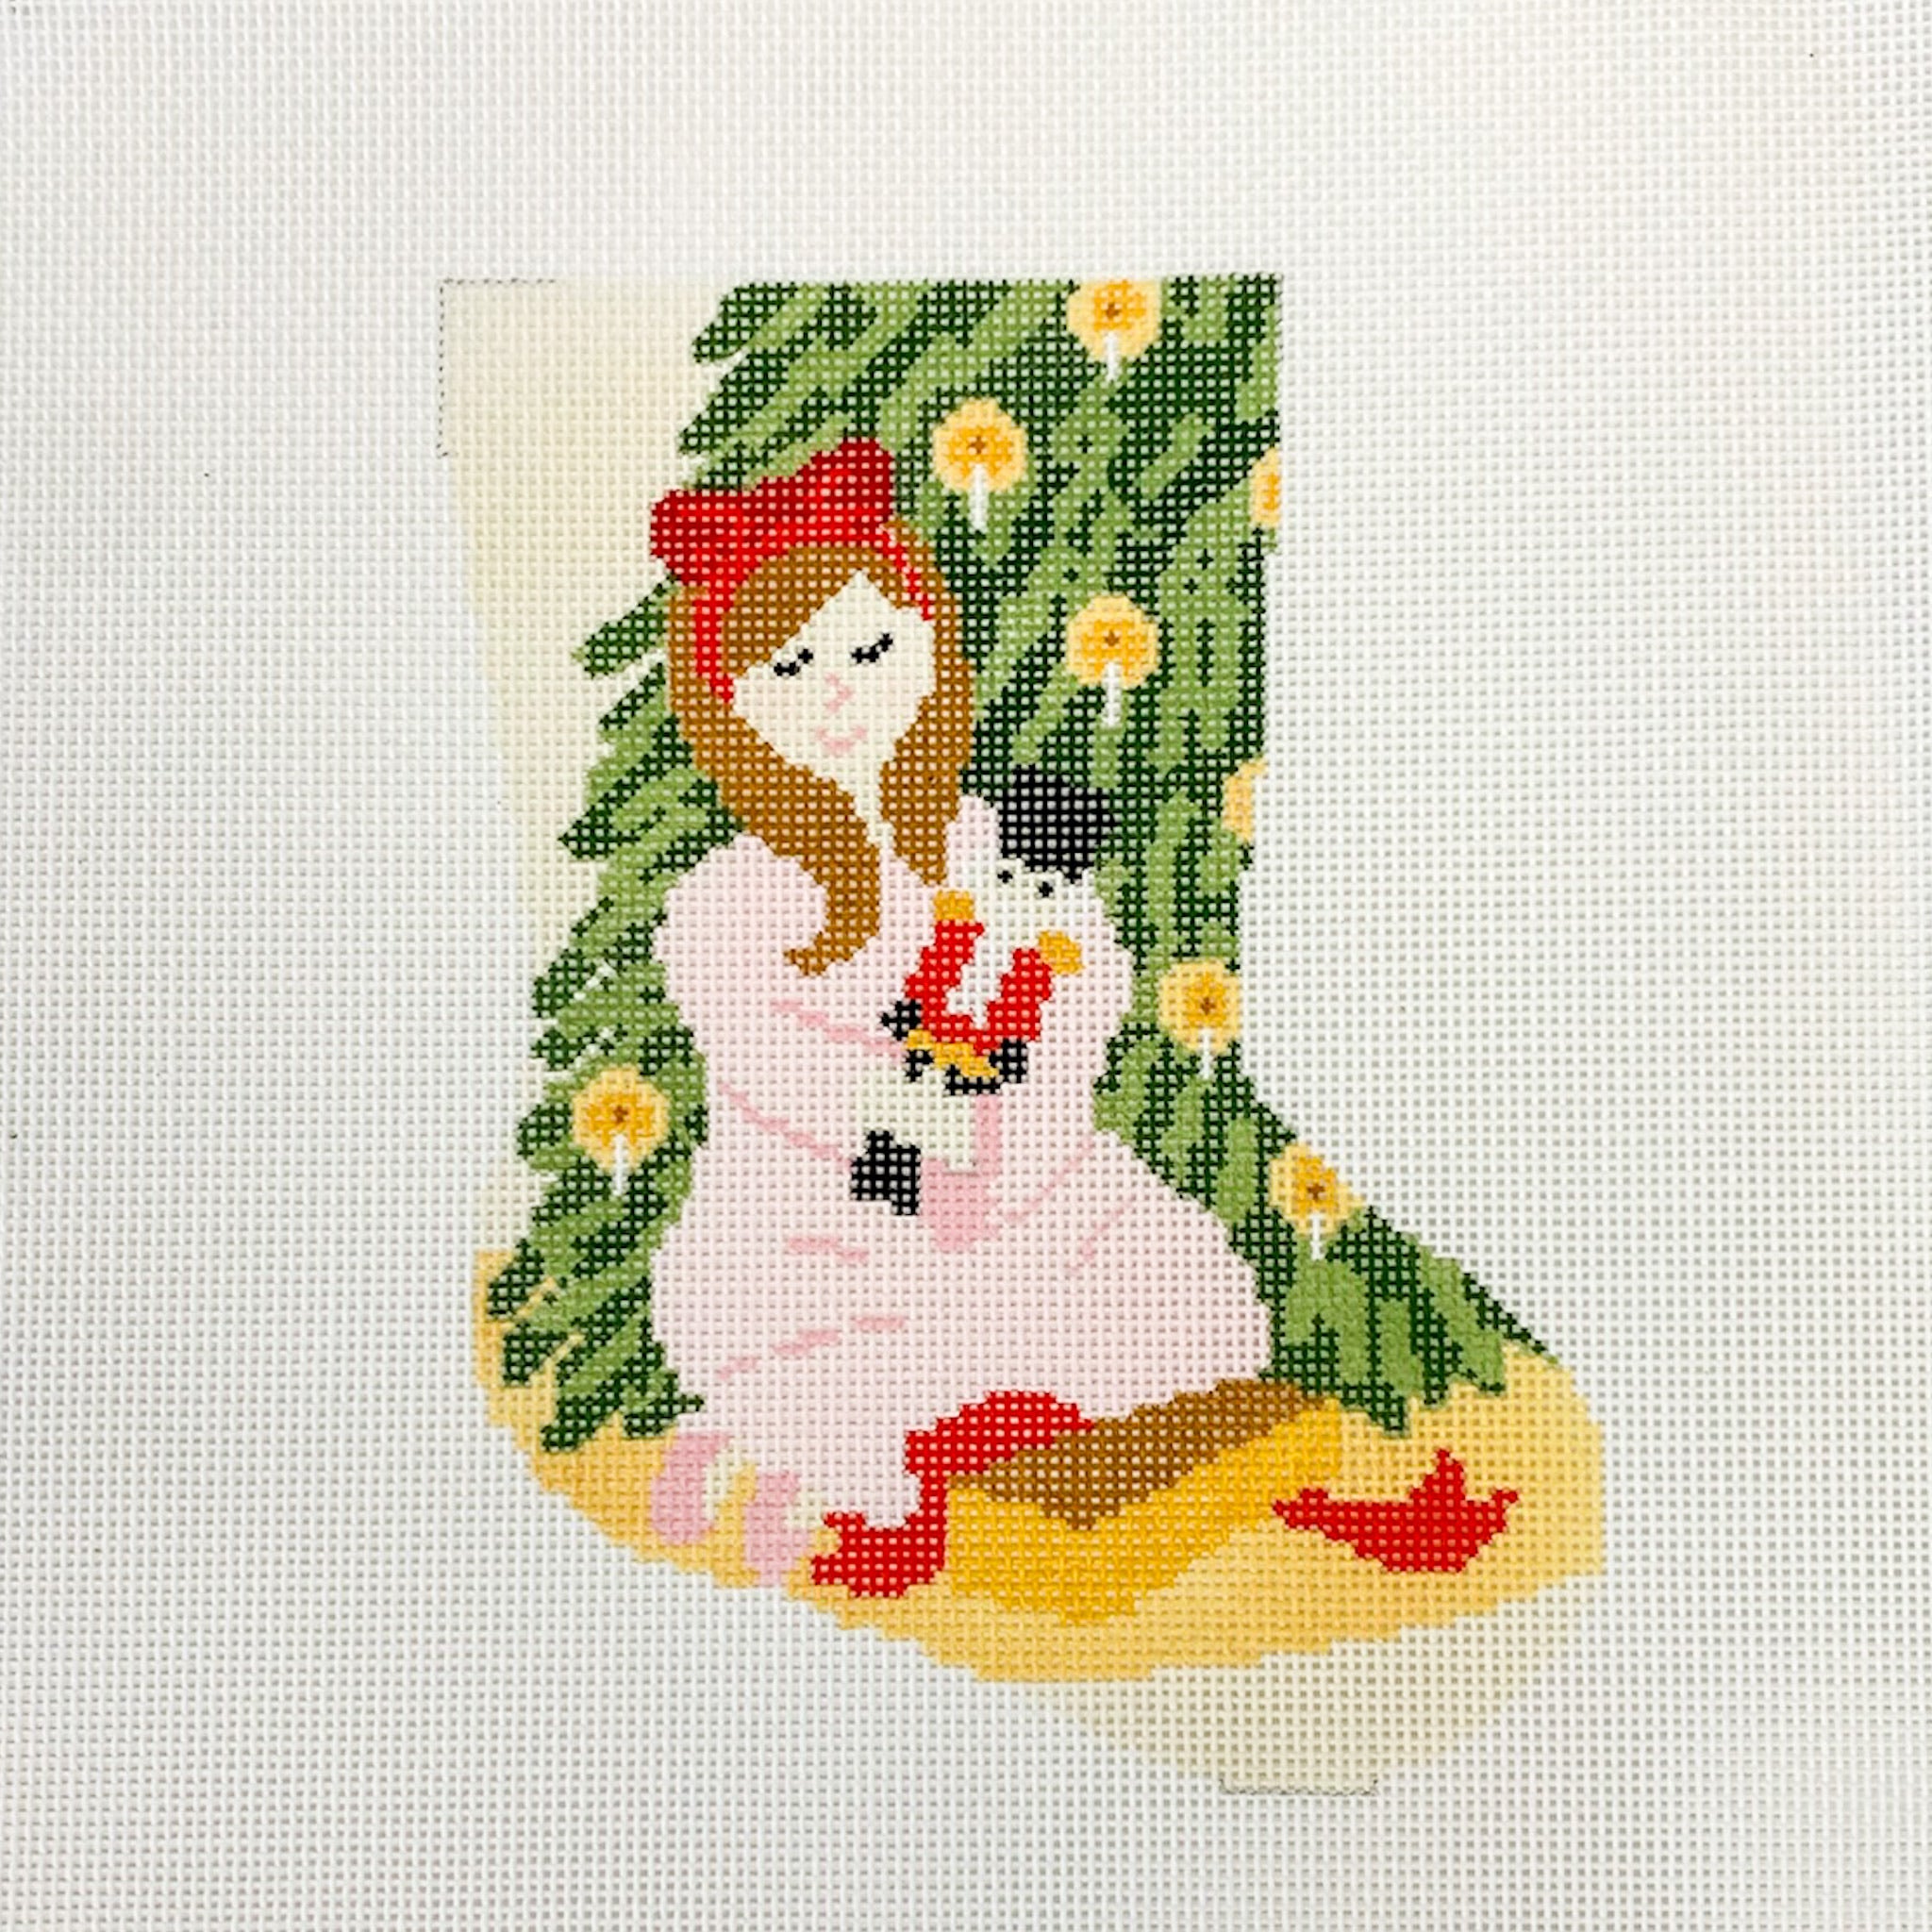 Stocking - Nutcracker Christmas hand-painted needlepoint stitching canvas, Needlepoint Canvases & Threads